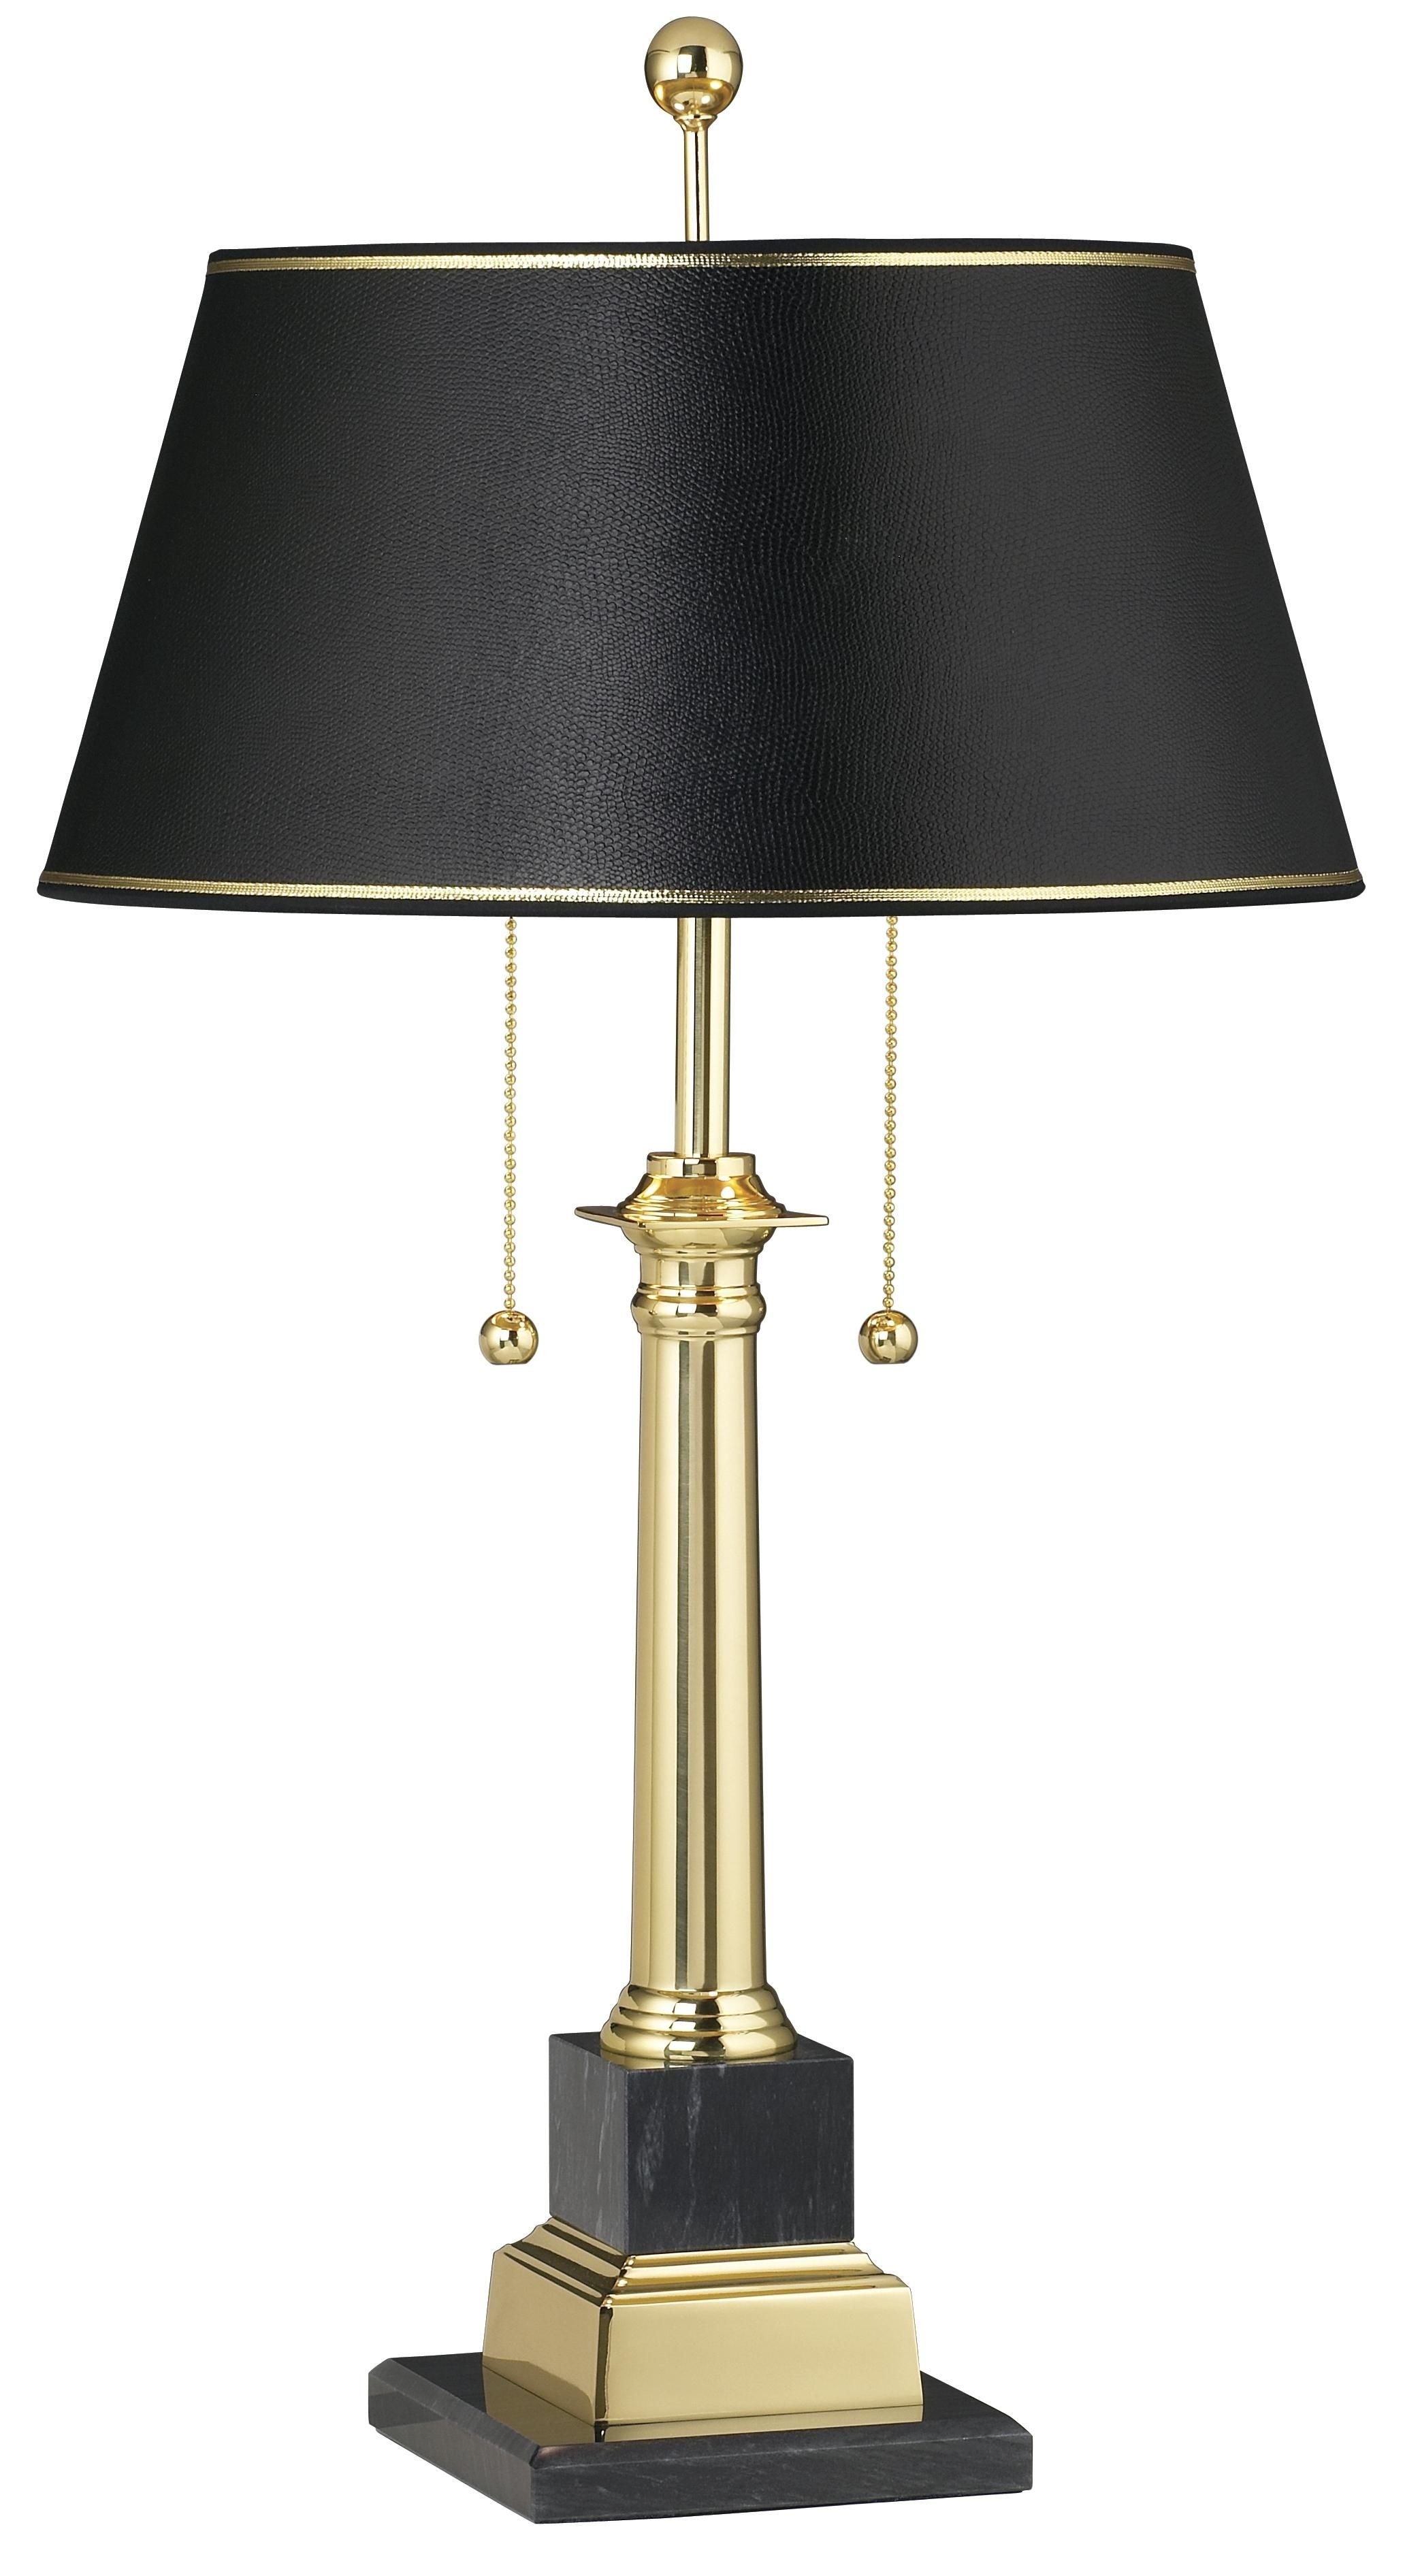 Georgetown solid brass desk lamp